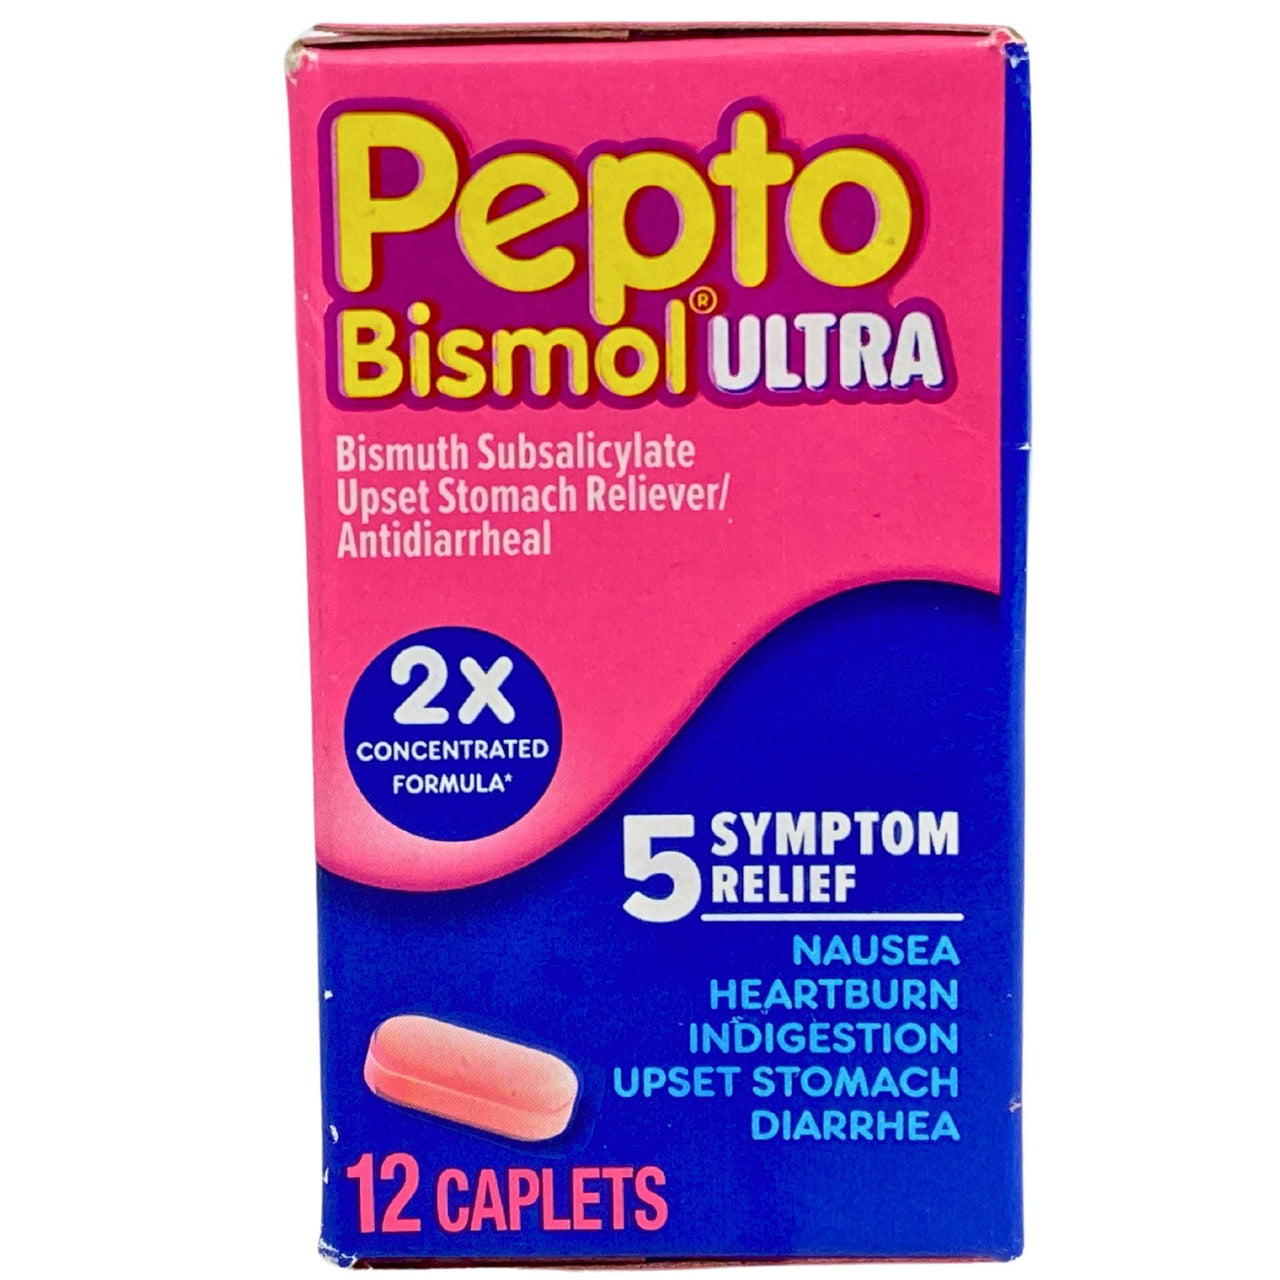 Pepto Bismol Ultra 2x Concentrated Formula 12 Caplets - 5 Symptom Relief Nausea,Heartburn,Indigestion,Upset Stomach & Diarrhea (28 Pcs Lot) - Discount Wholesalers Inc